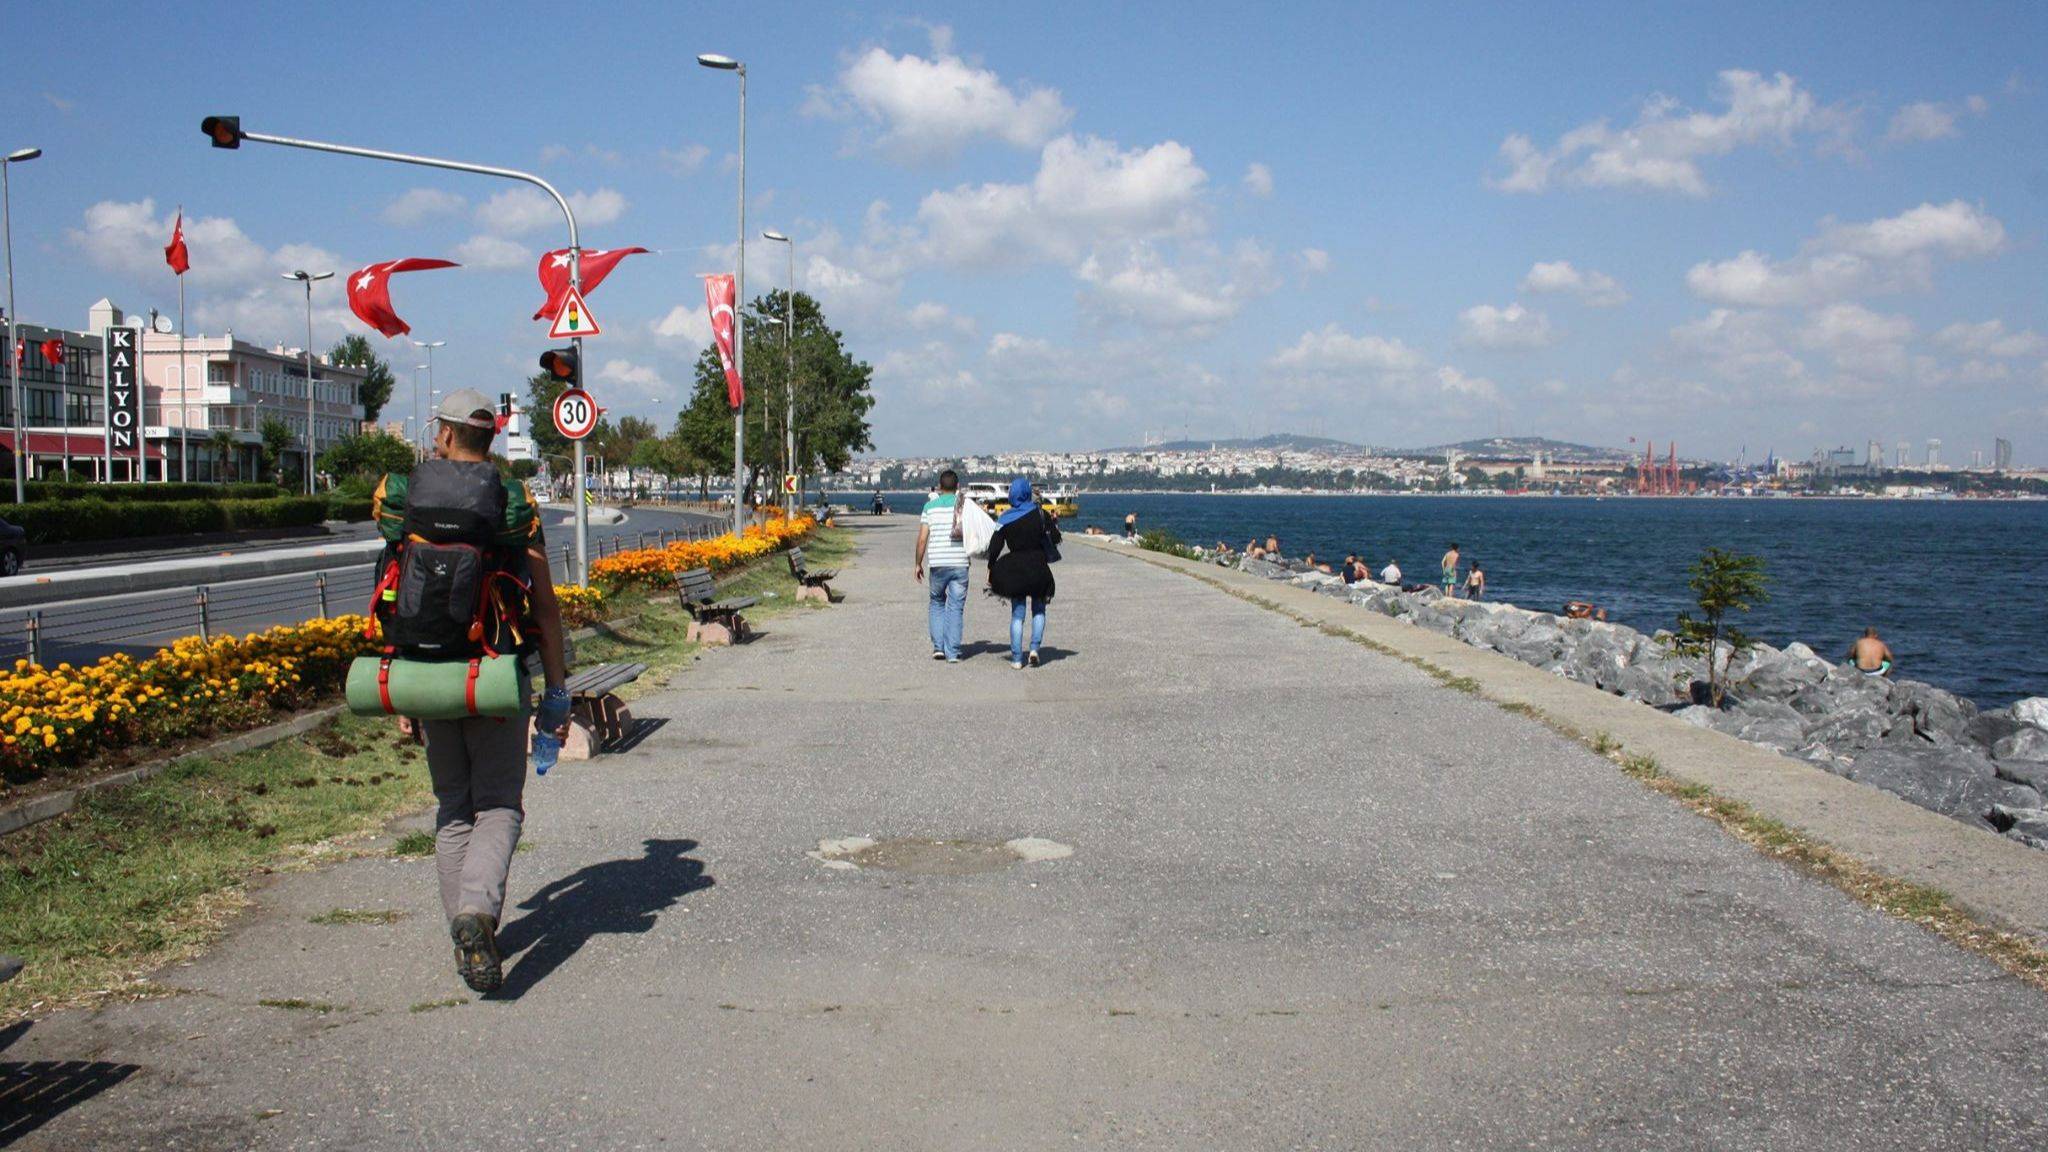 The shore of Bosphorus